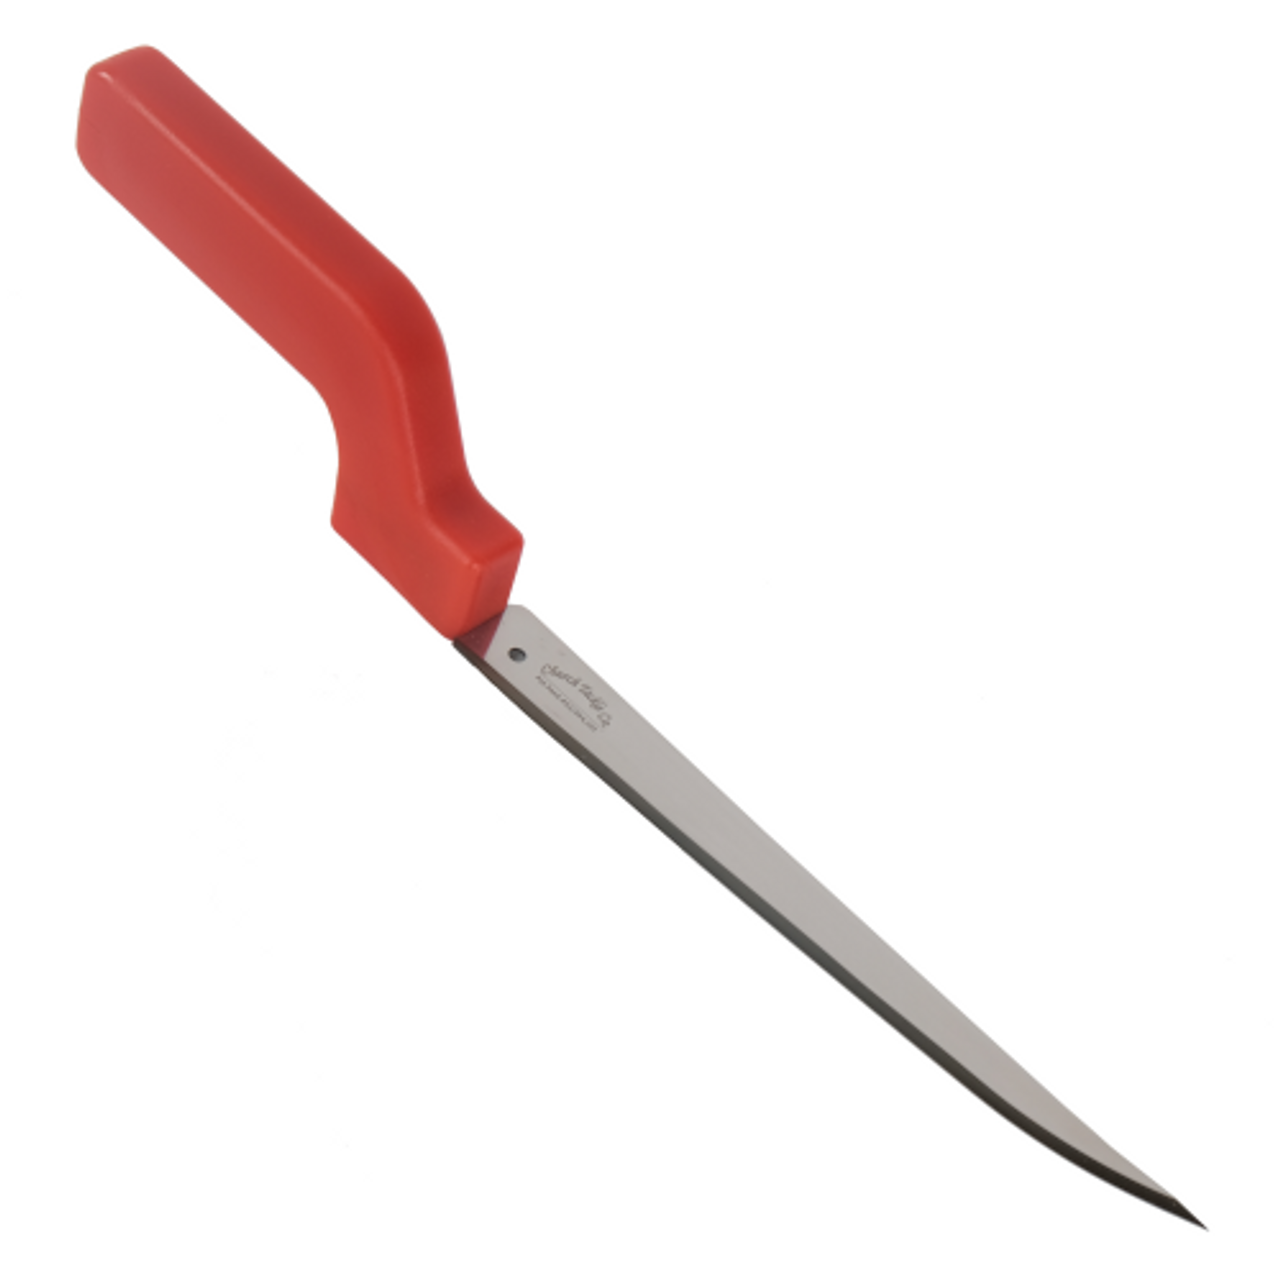 Blade Tamer 8 Knife Sheath